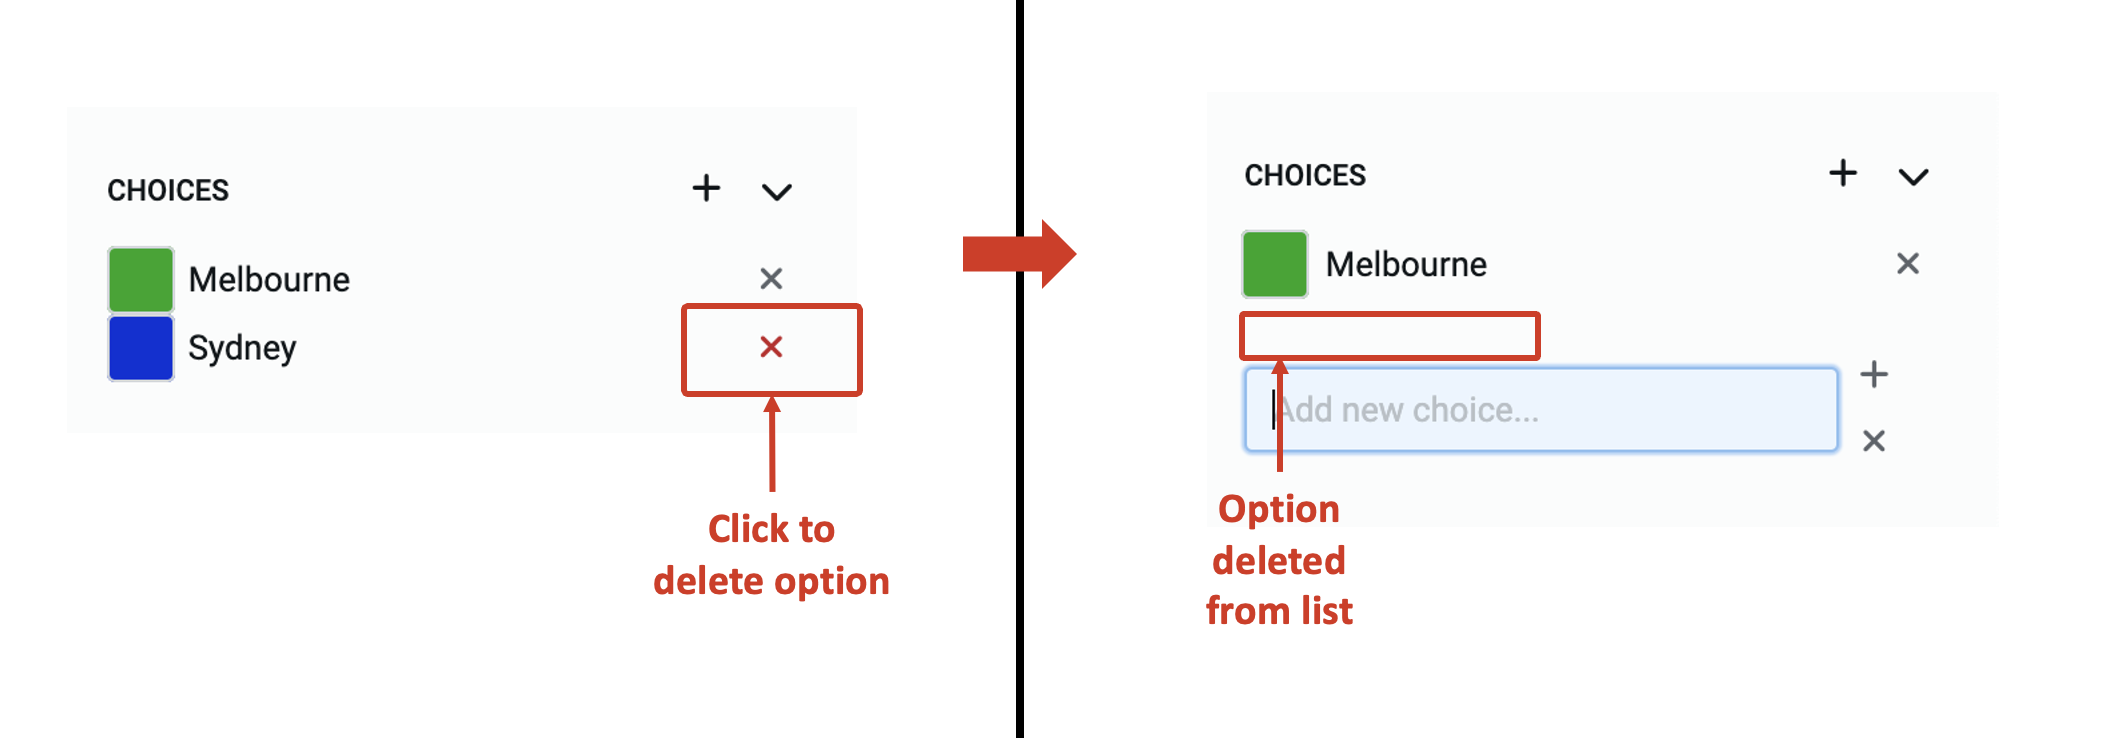 Image showing deletion of option